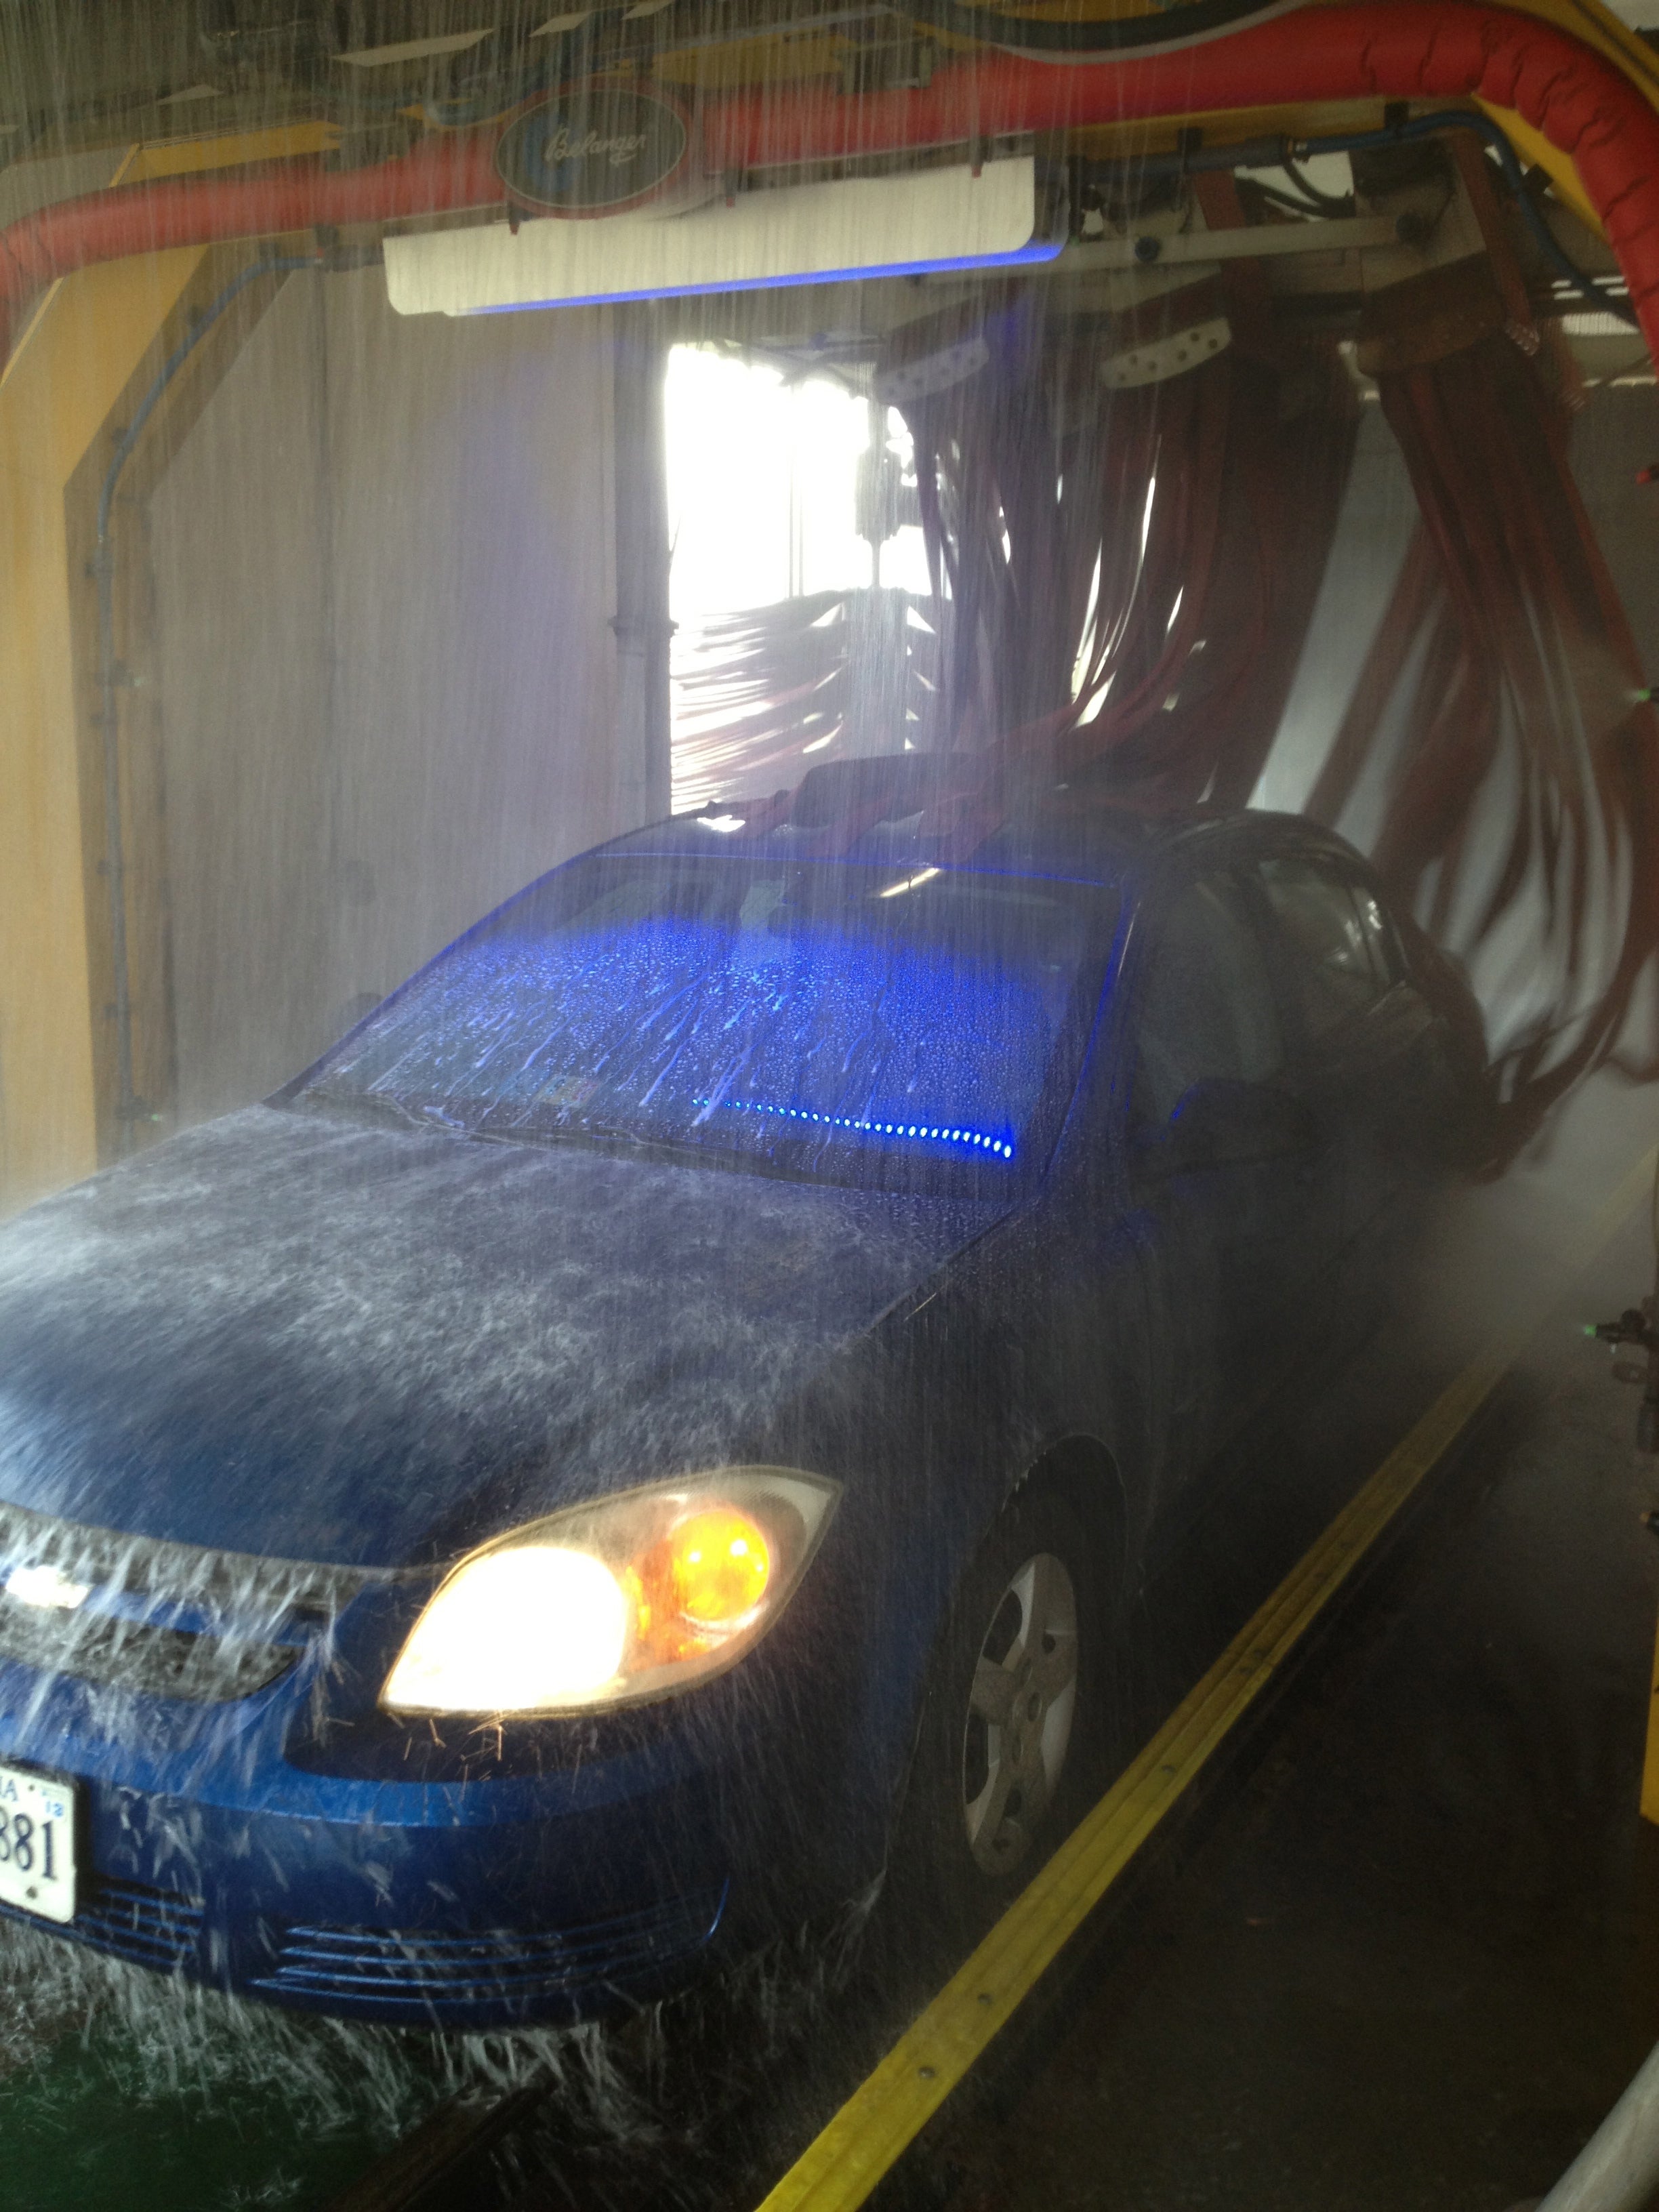 Flagstop Car Wash